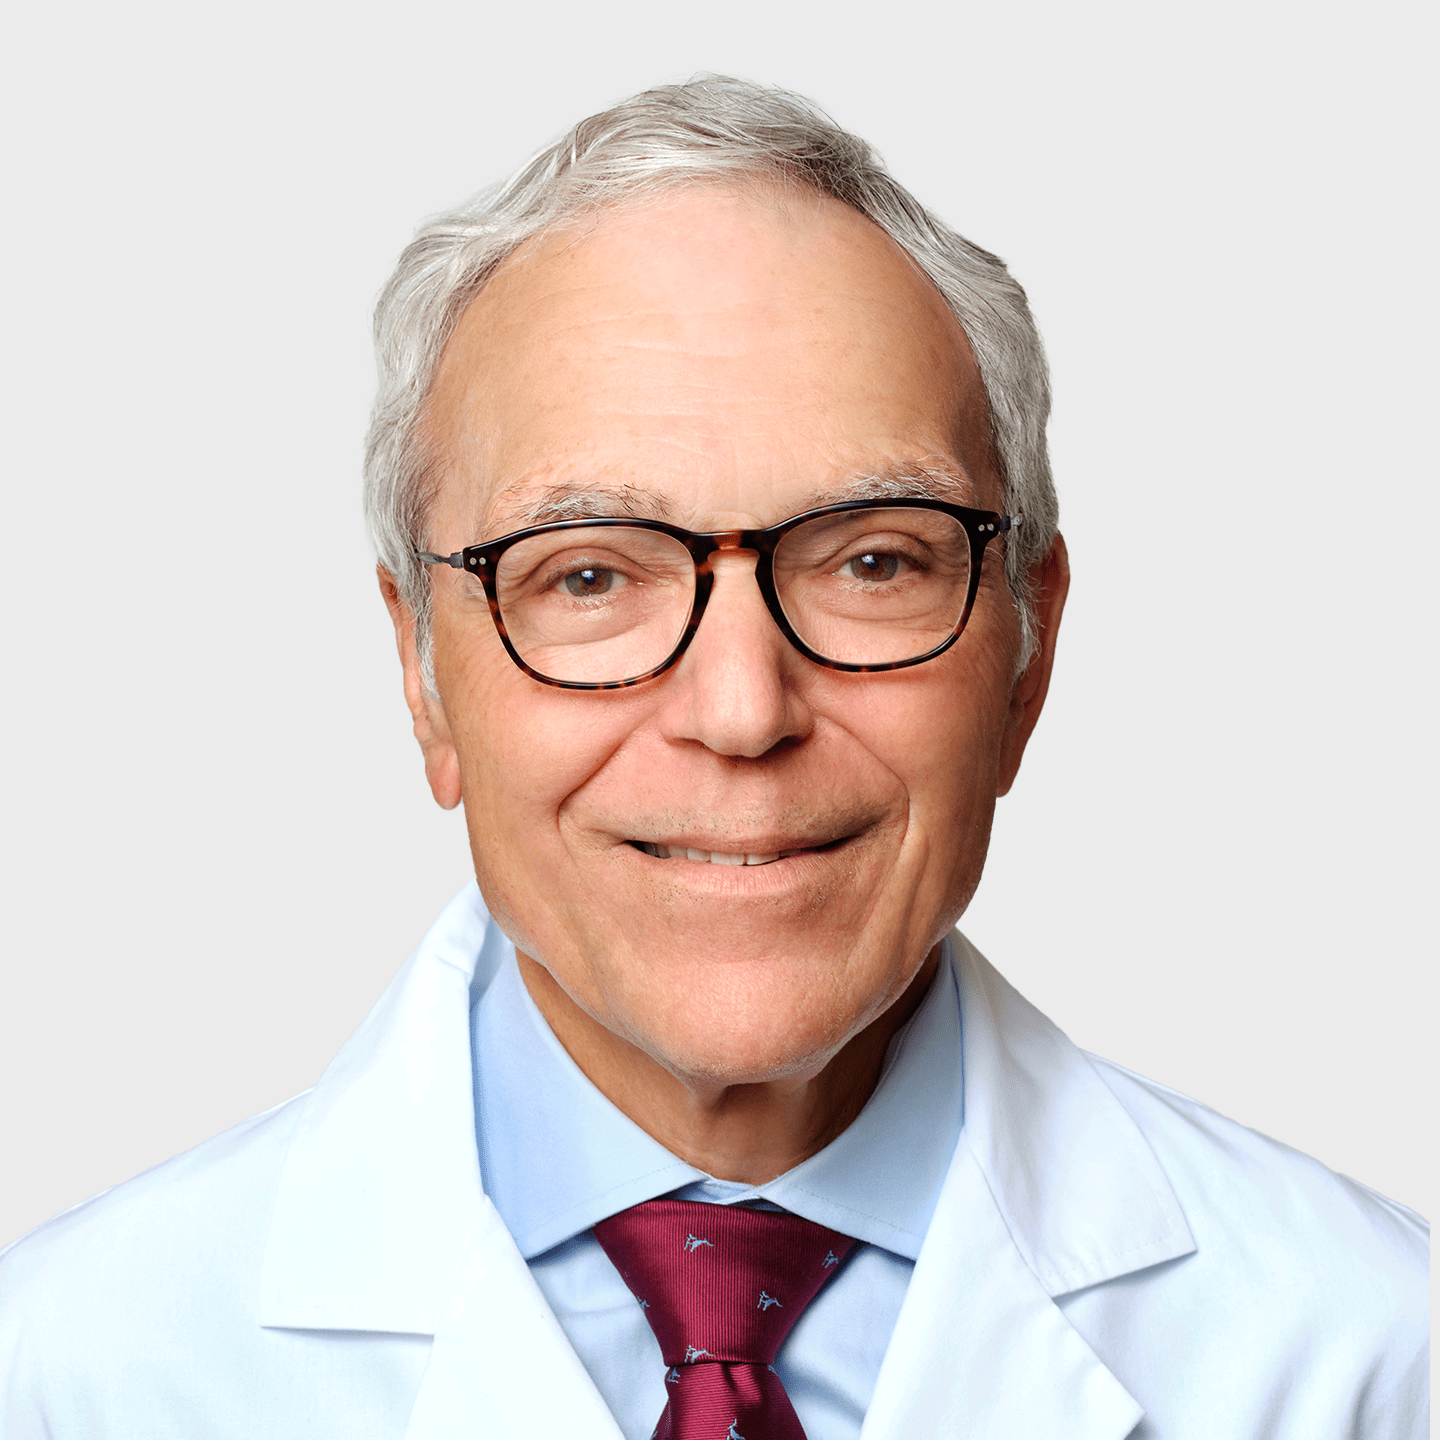 Physician Spotlight on Dr. Samuel Gerber